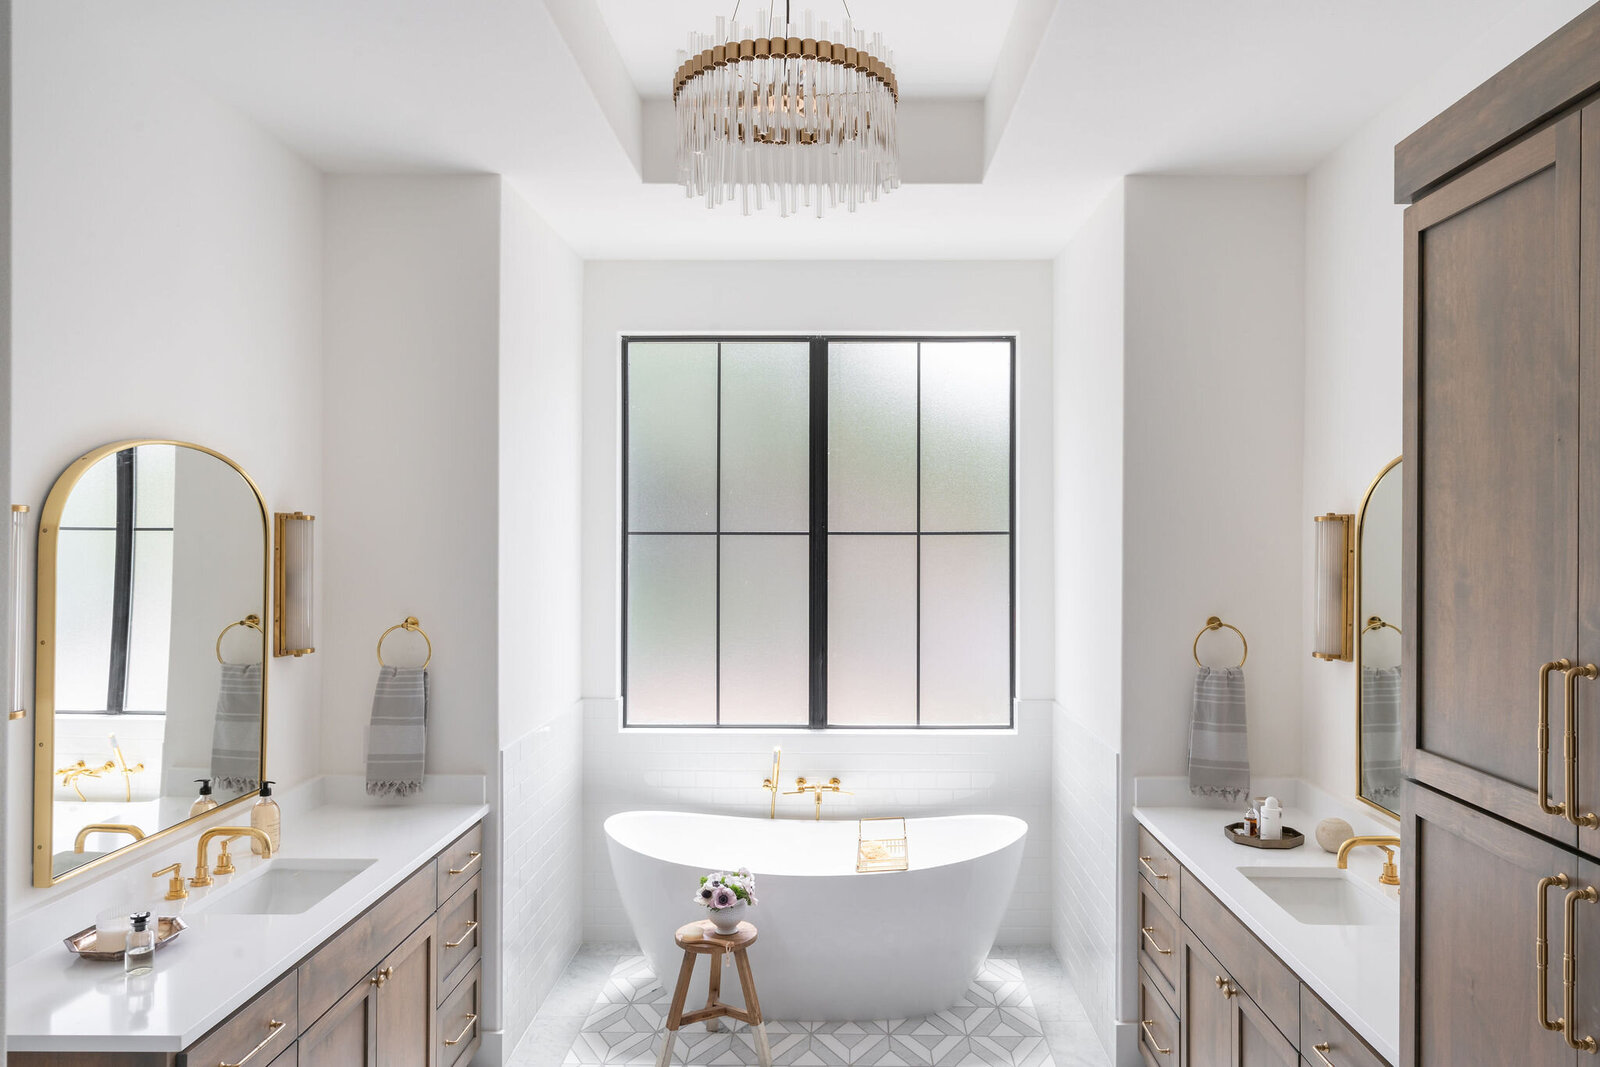 NuelaDesign_Wood Vanity Bathroom Design with Gold